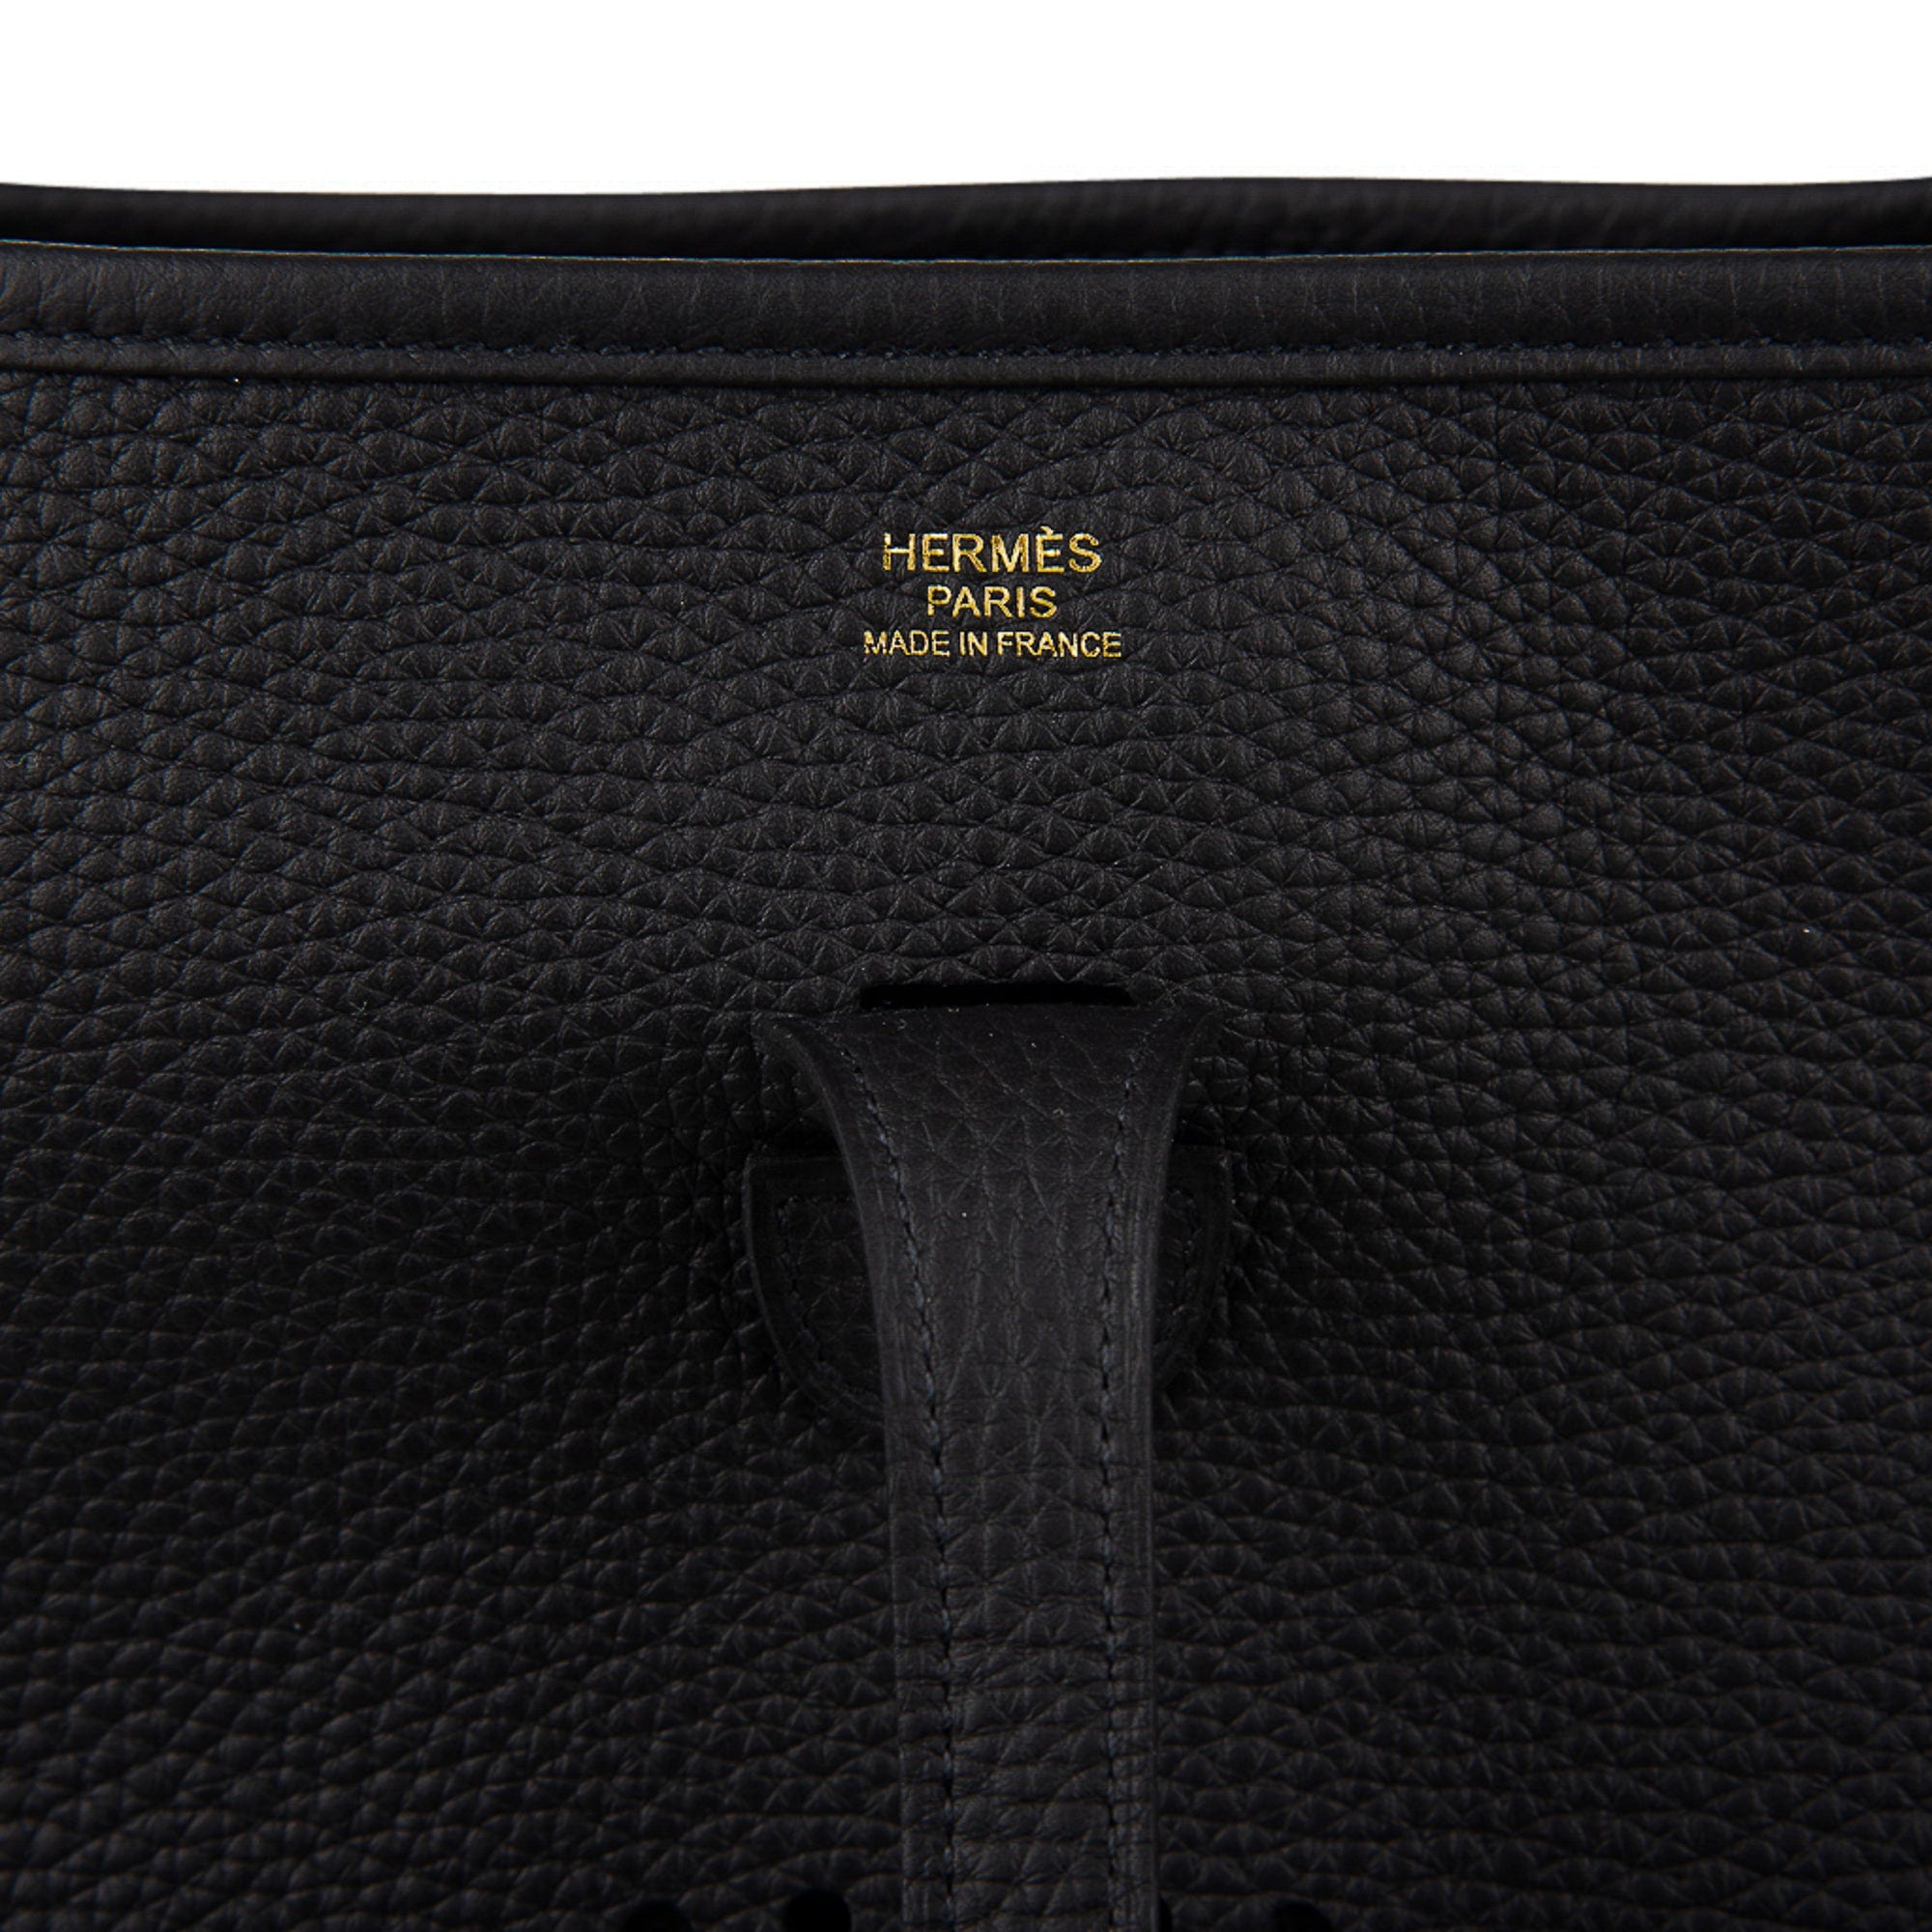 Black leather, canvas and palladium hardware, Evelyne PM 29, Hermès, 2011, Hermès Handbags & Accessories Online, Jewellery